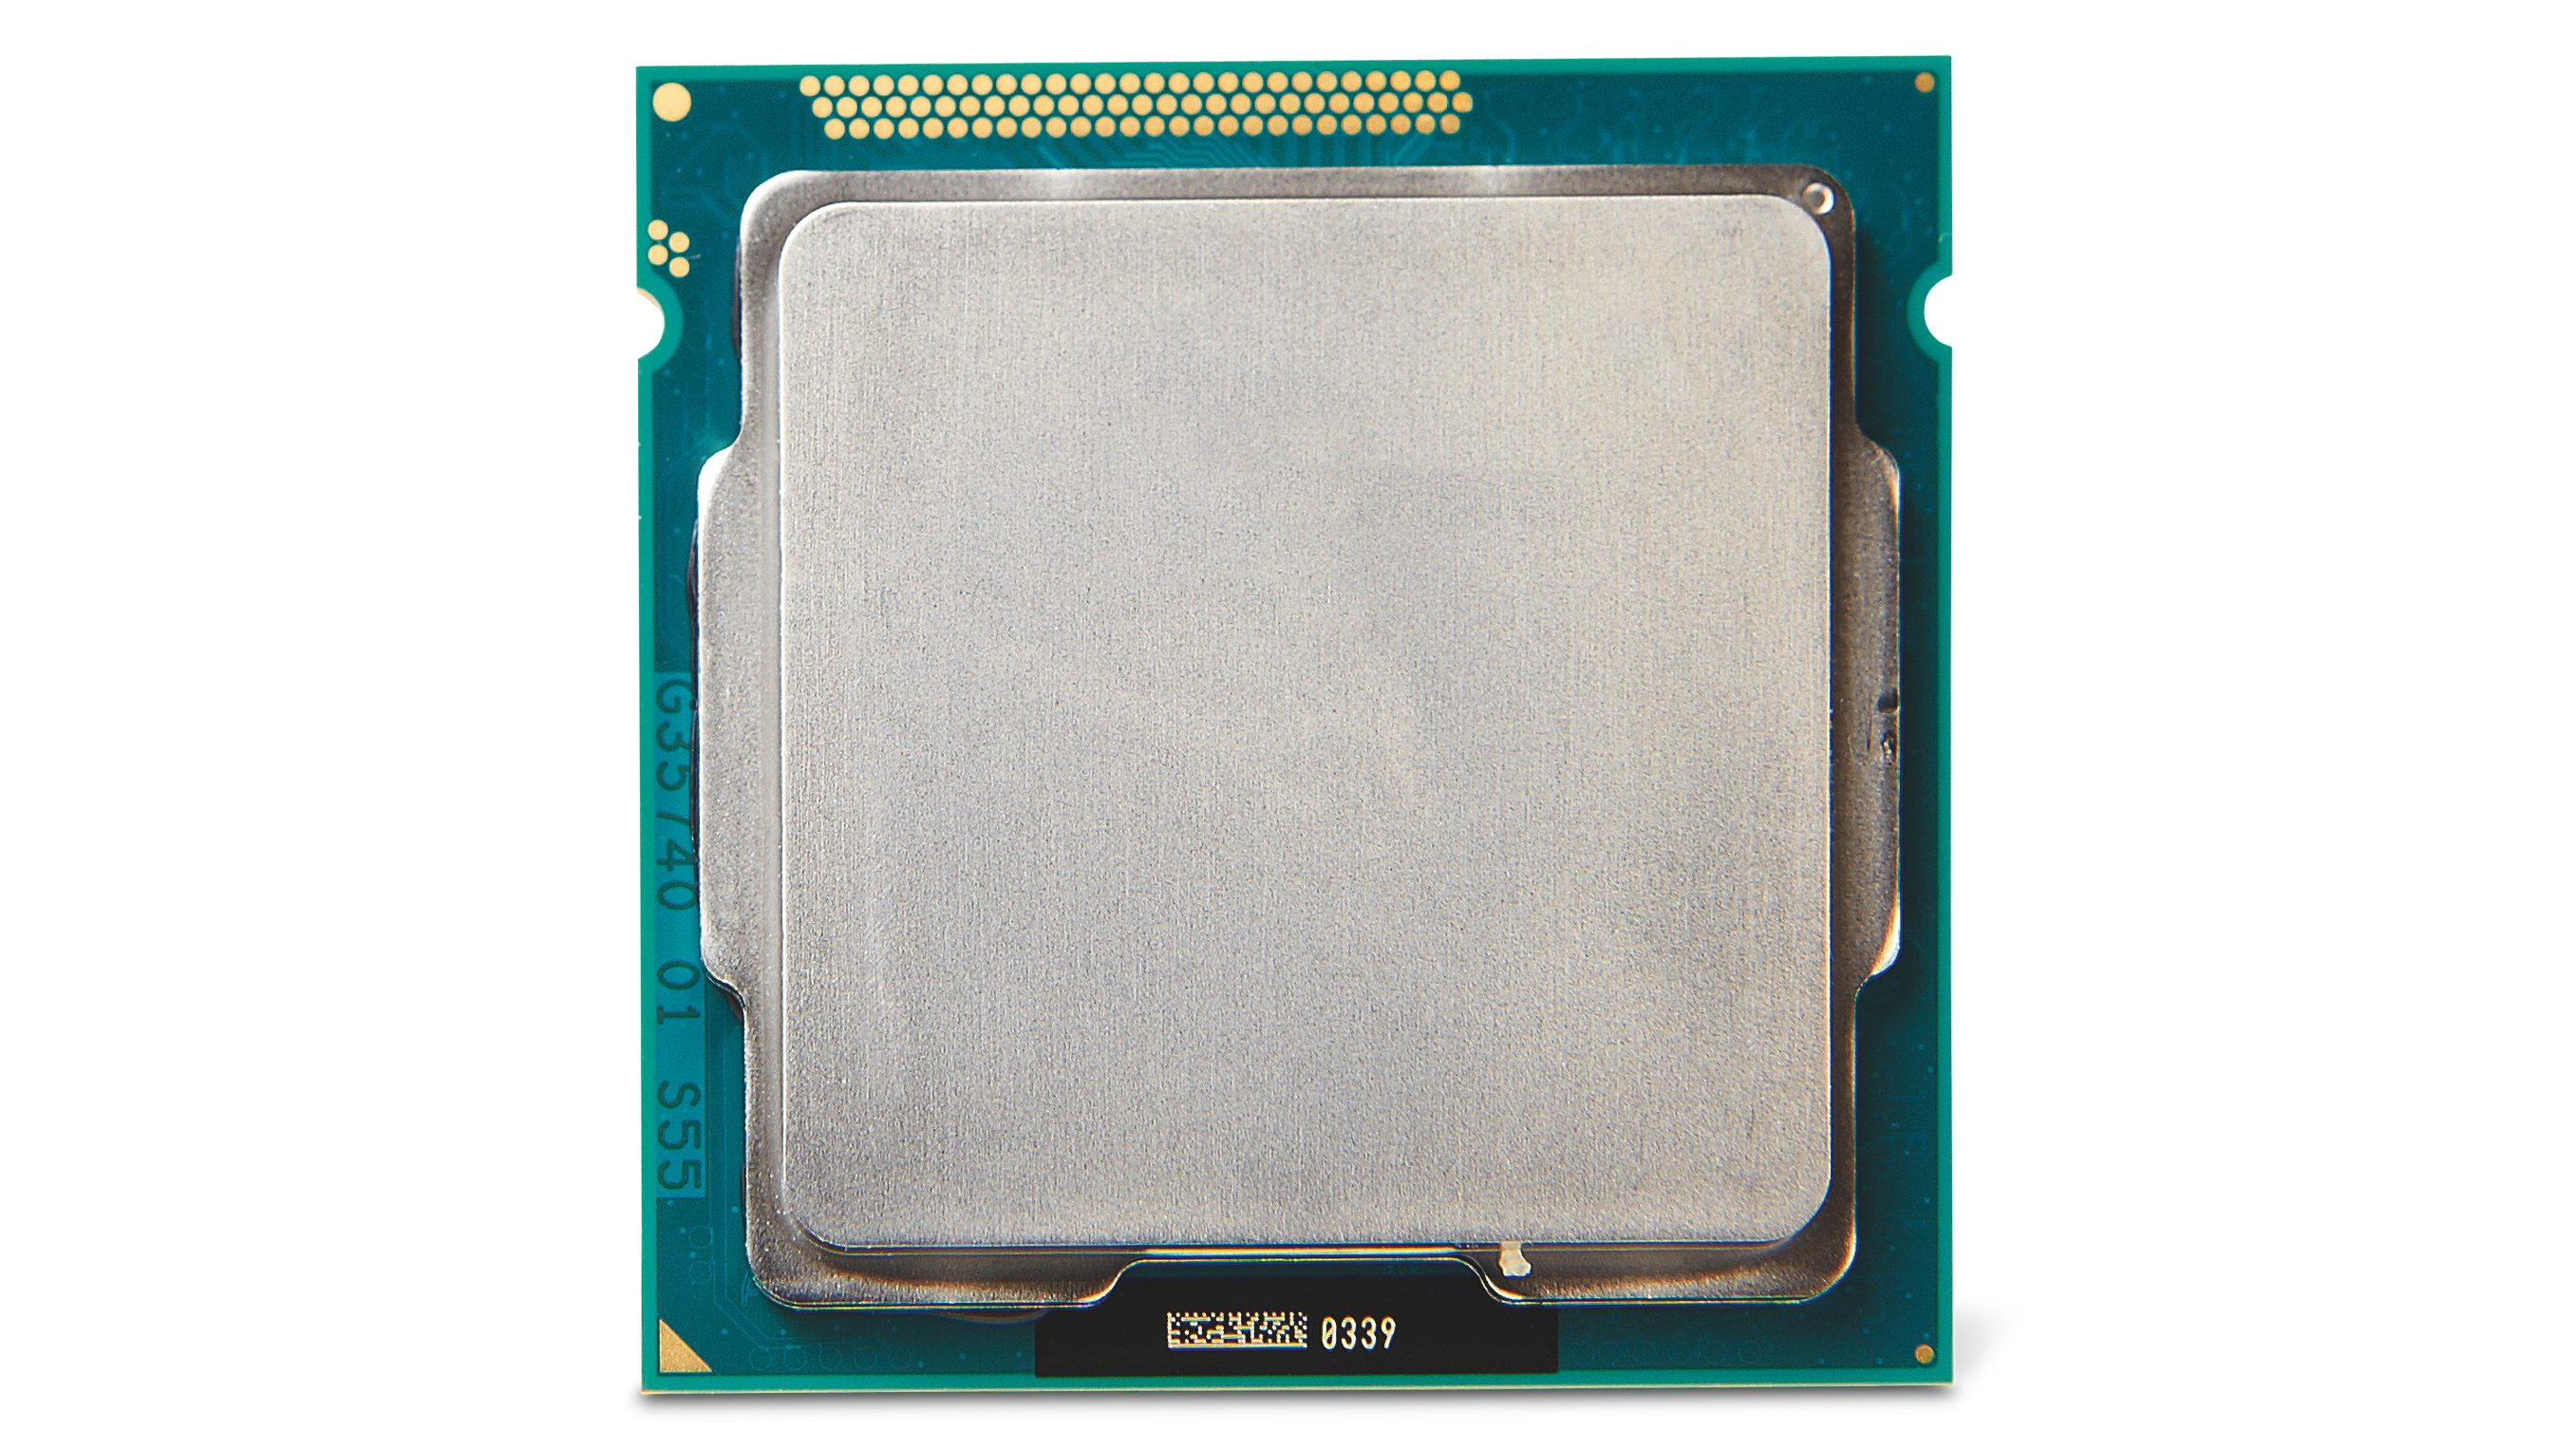 Intel Core i7 3770K review | TechRadar